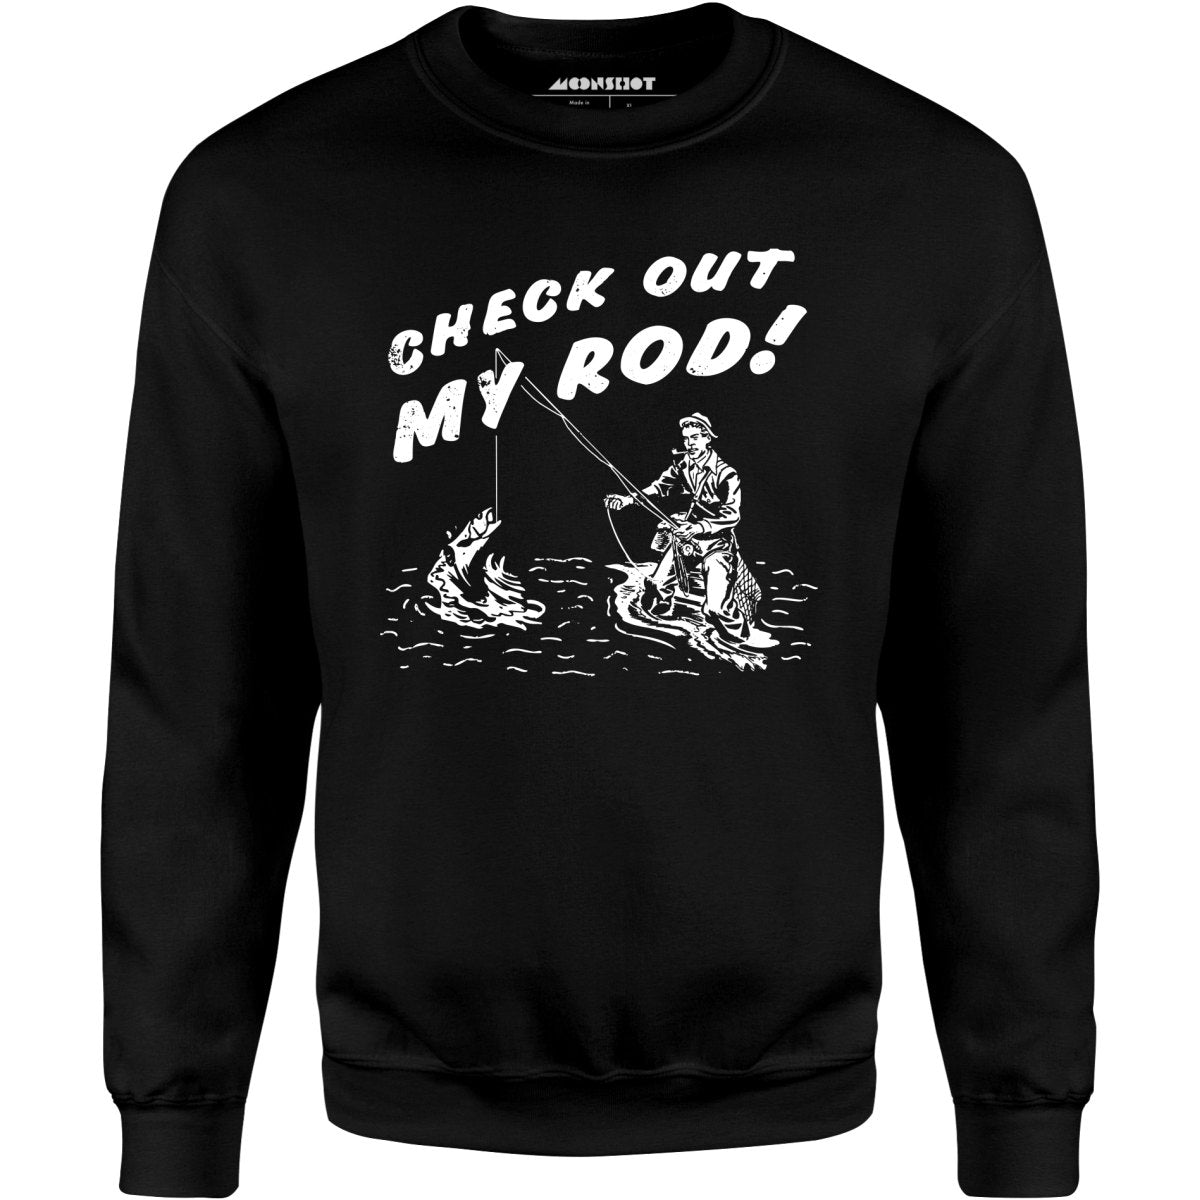 Check Out My Rod - Unisex Sweatshirt